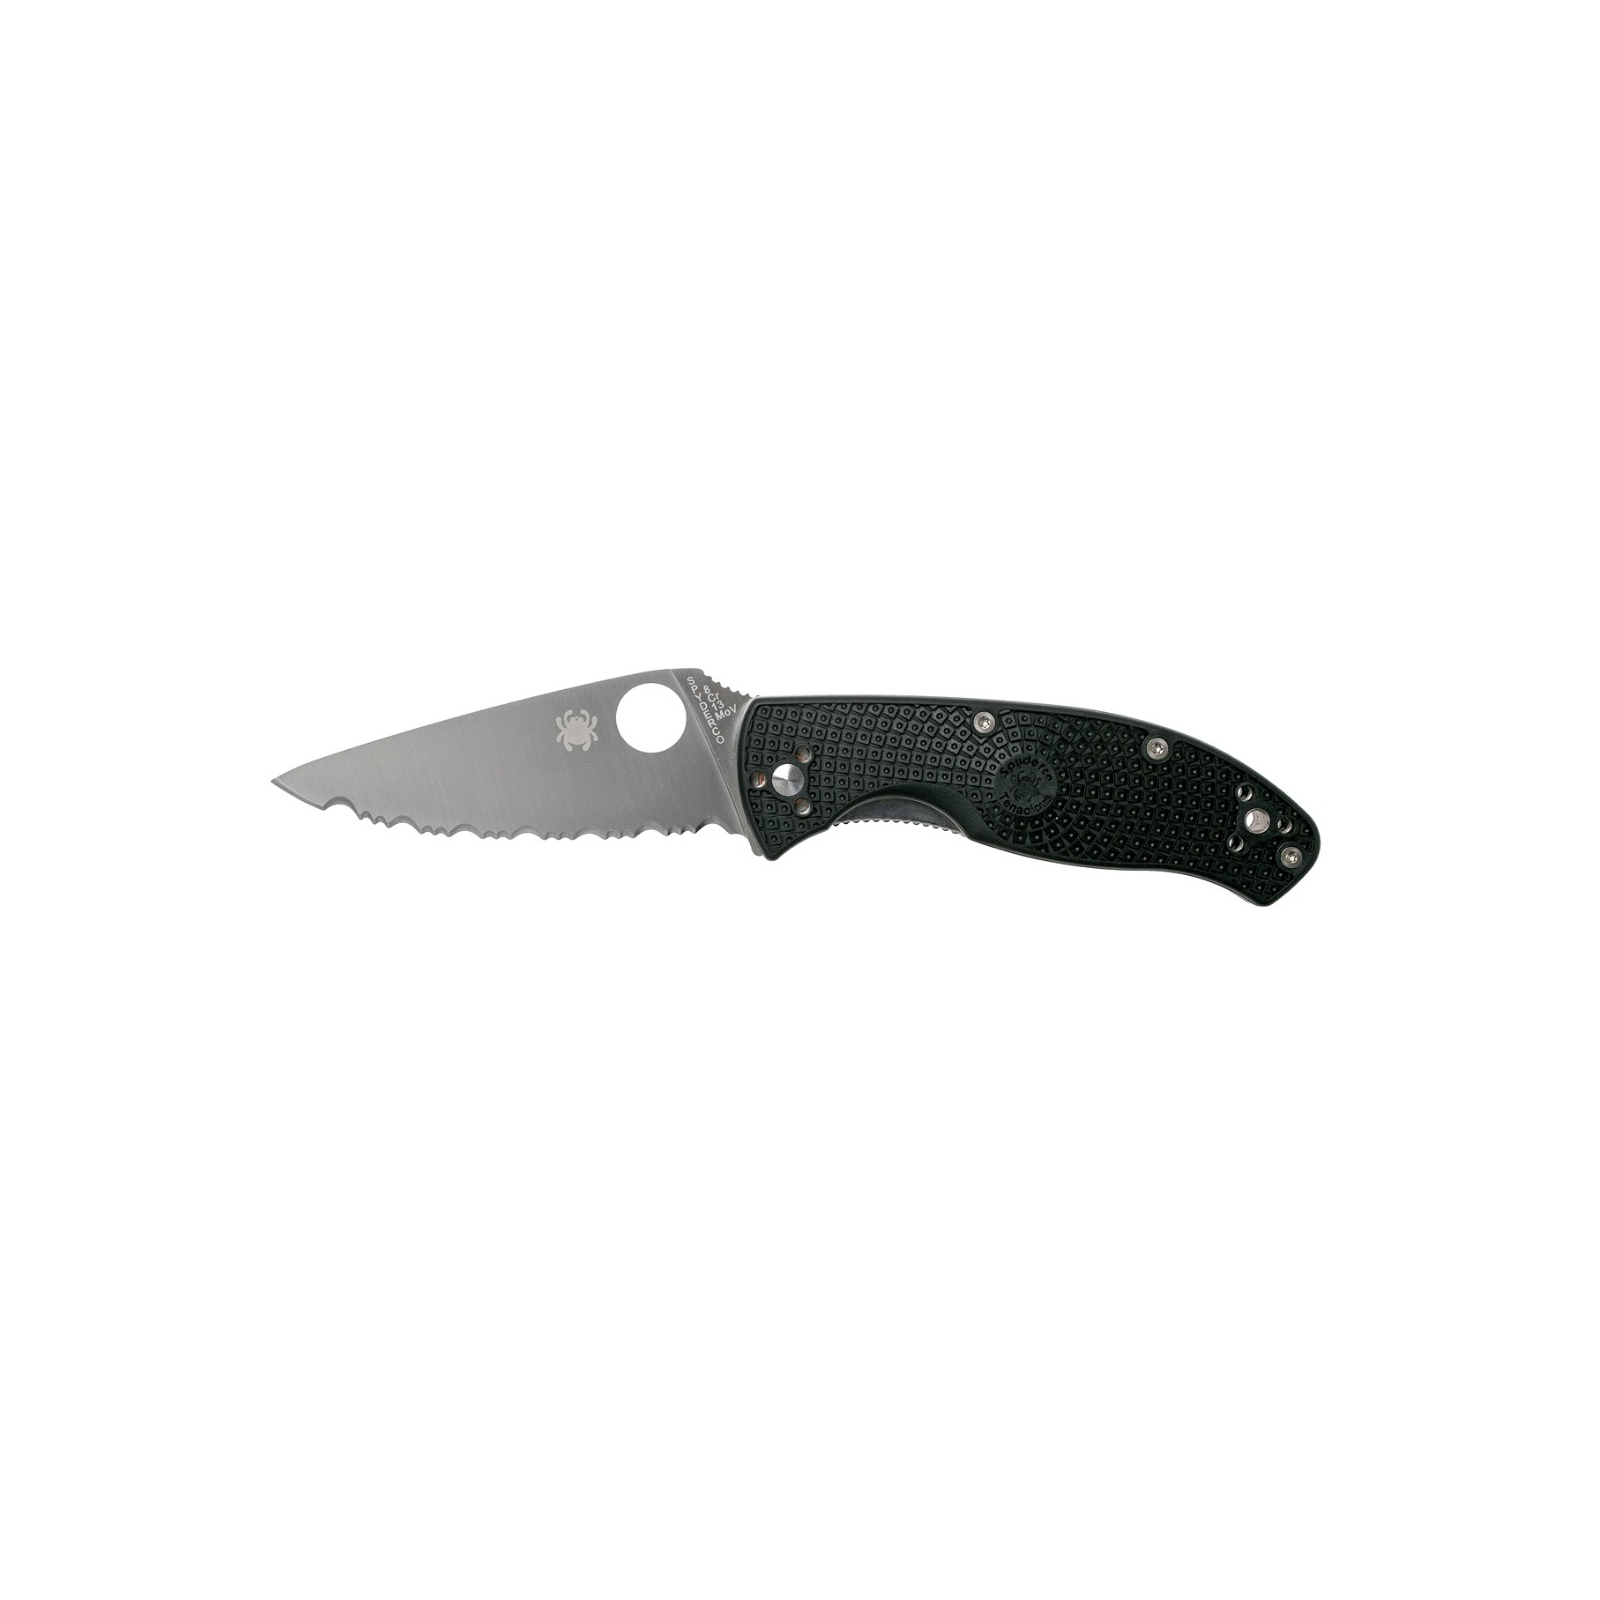 Нож Spyderco Tenacious Black Blade FRN серрейтор (C122SBBK)